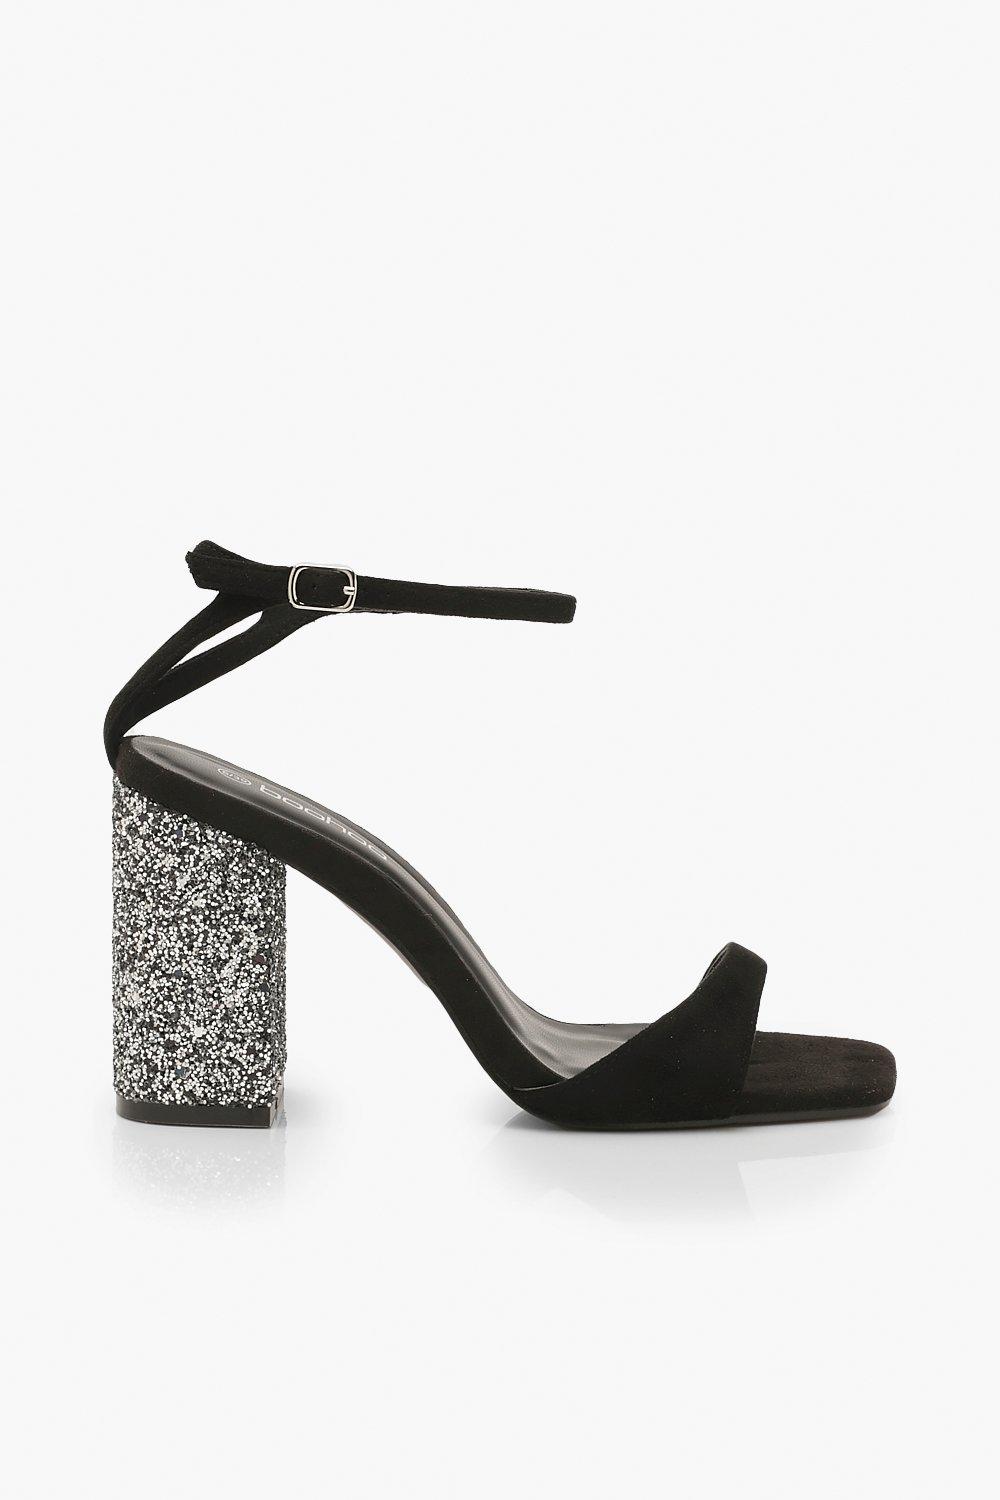 black sparkly block heels